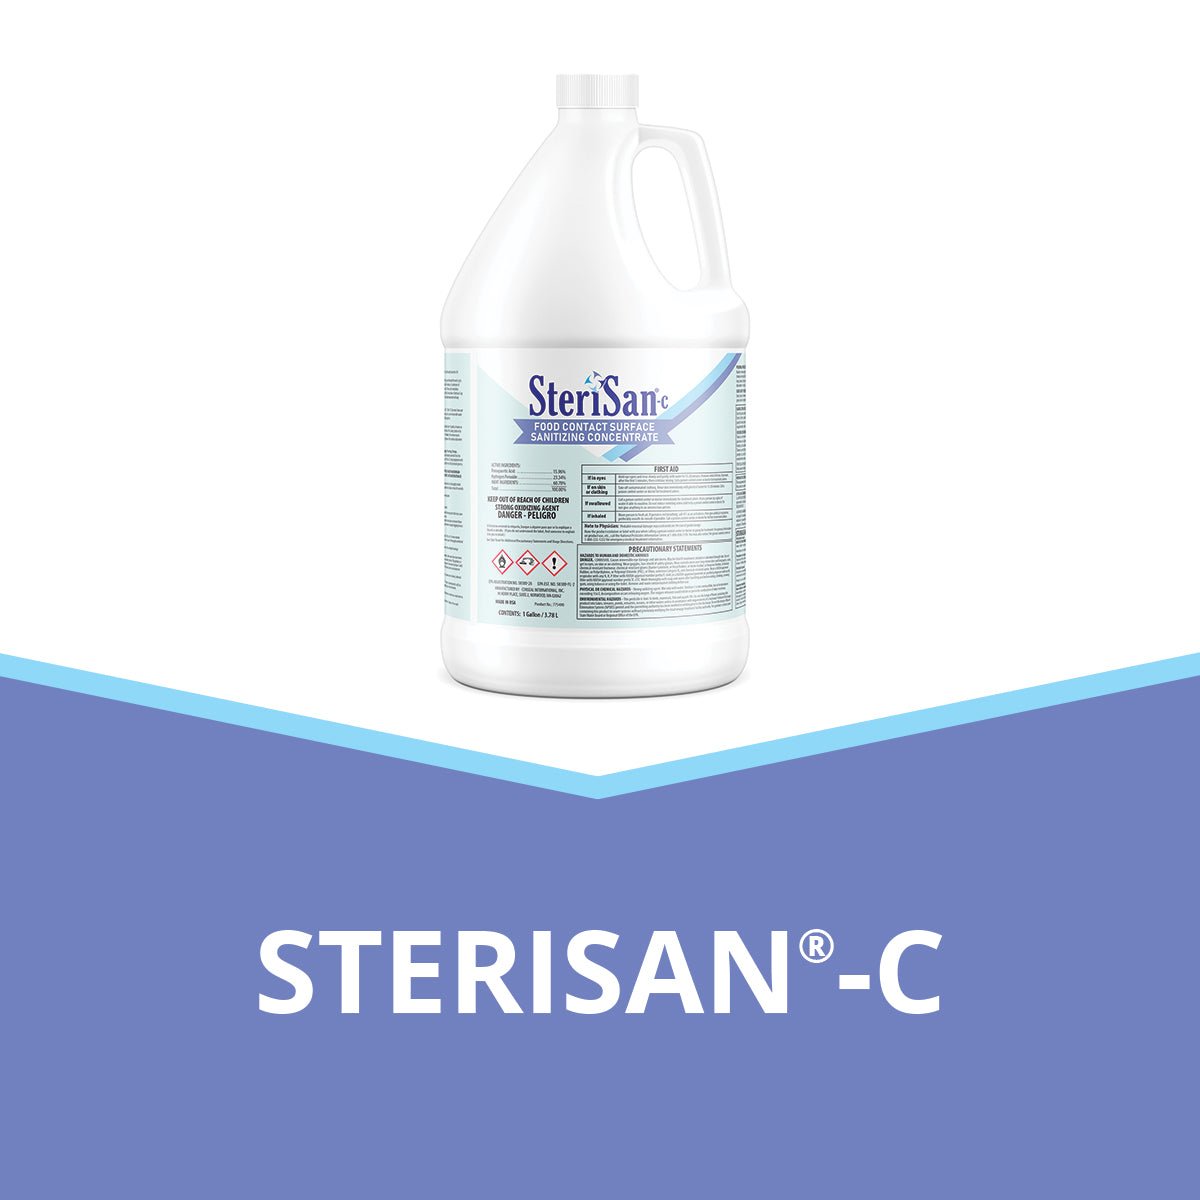 SteriSan®-C